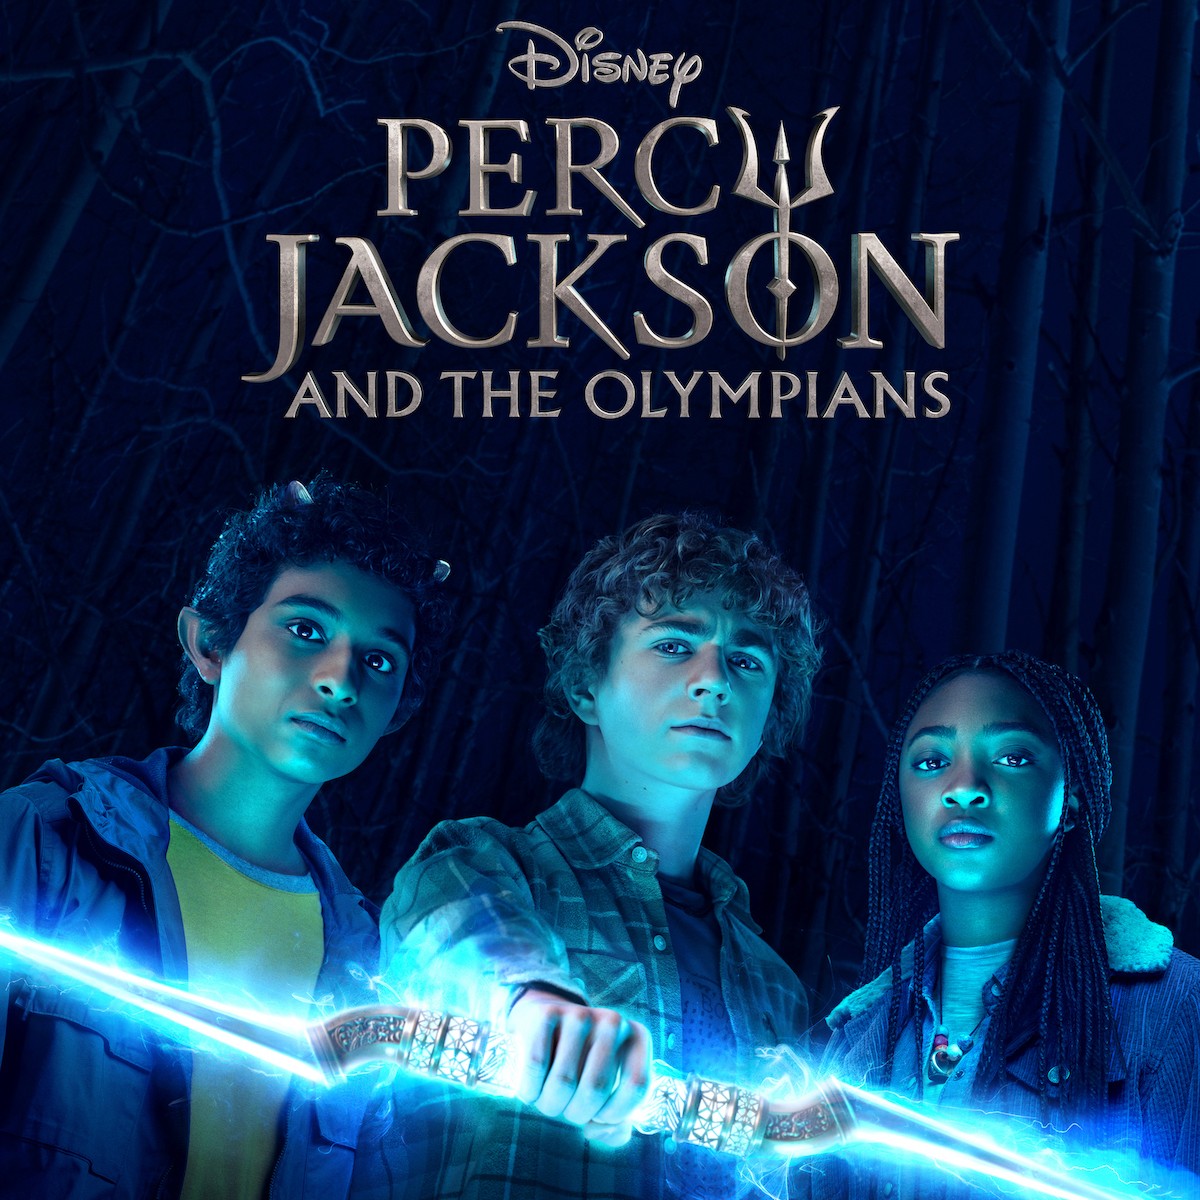 Percy Jackson series has finally cast Zeus and Poseidon